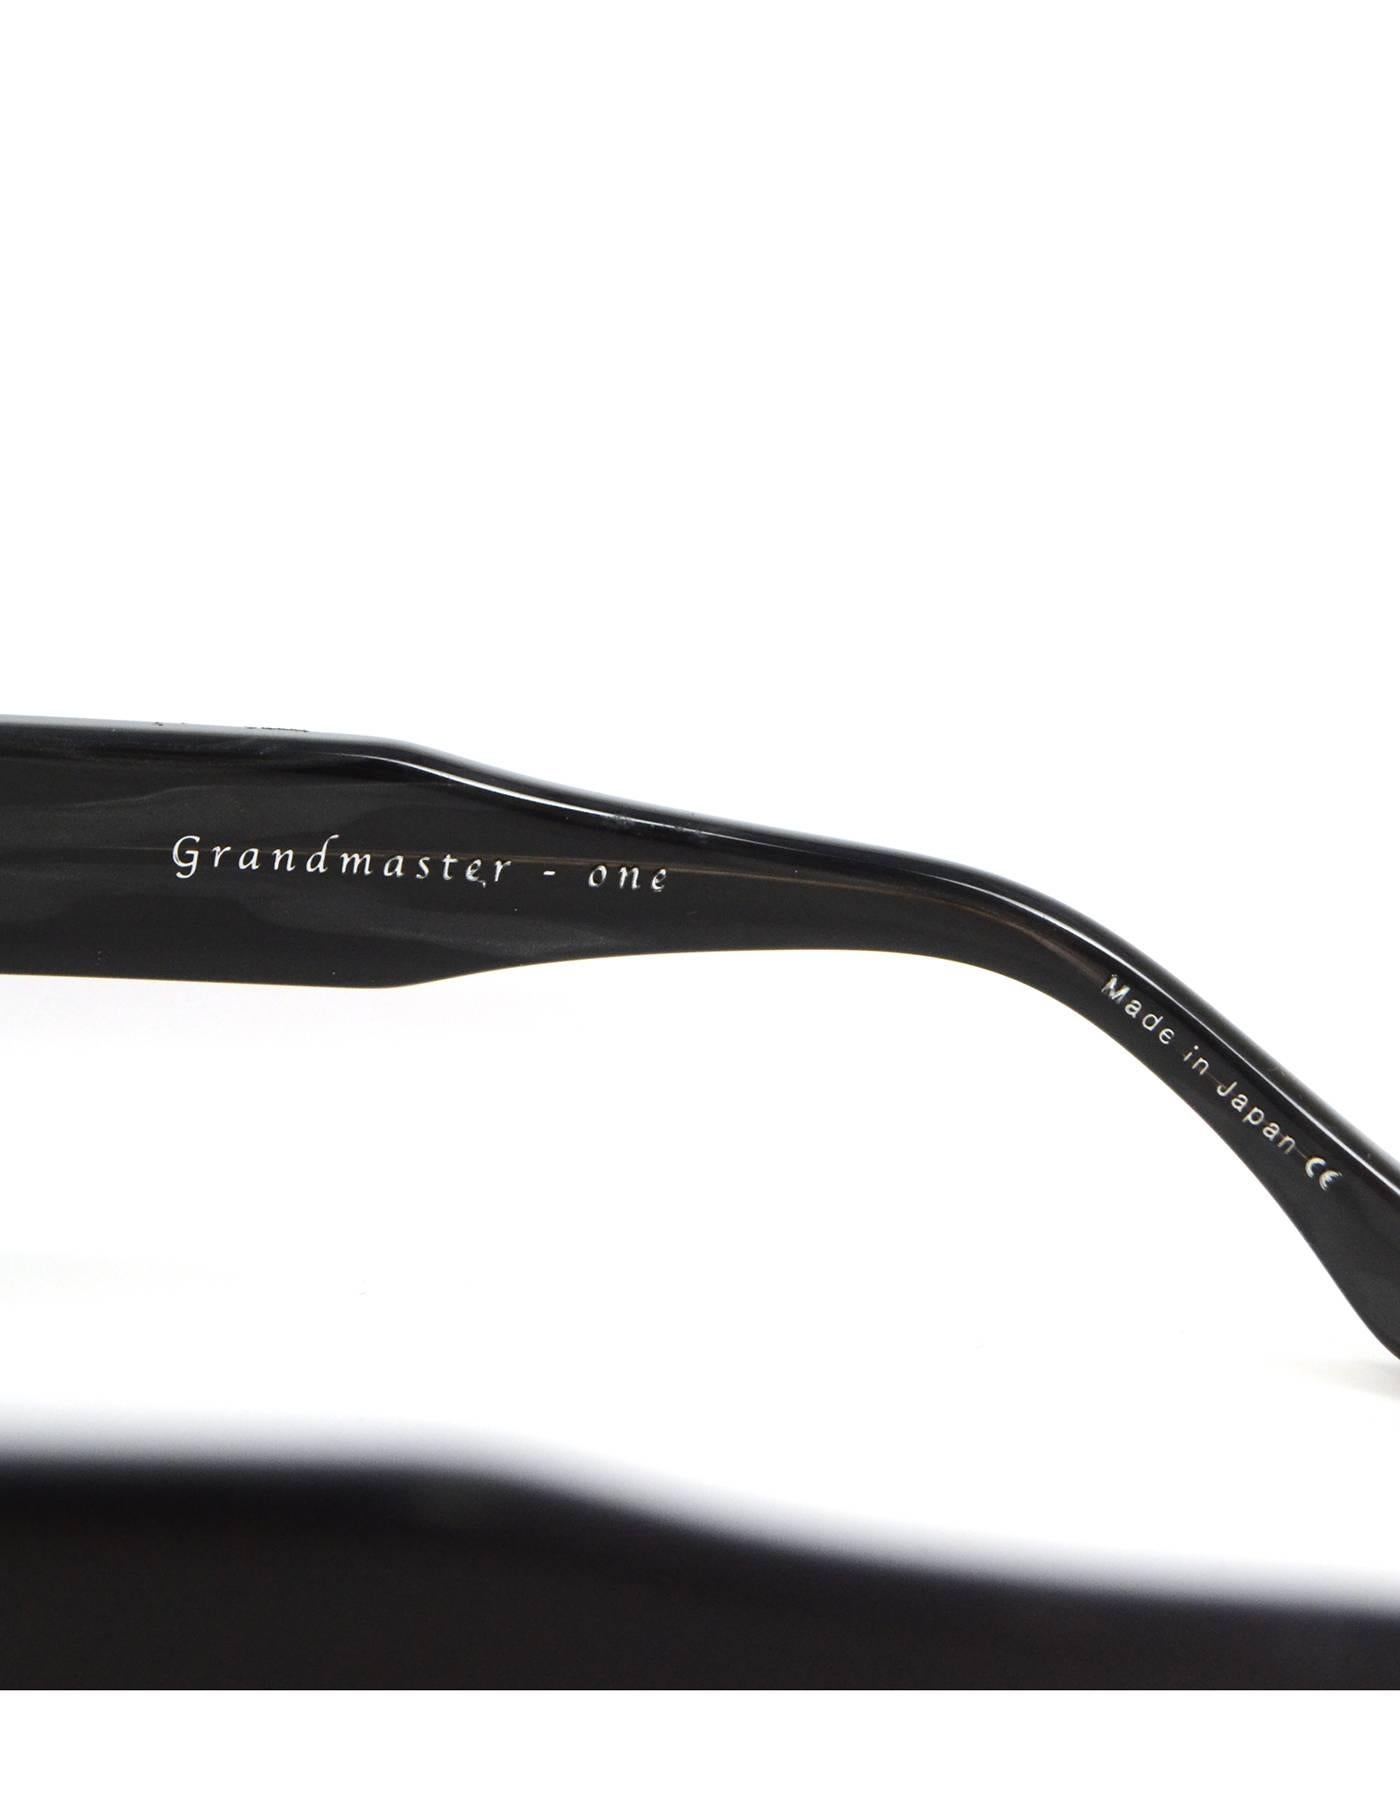 Gray DITA Men's Black Grandmaster - One Sunglasses with Black Hardware